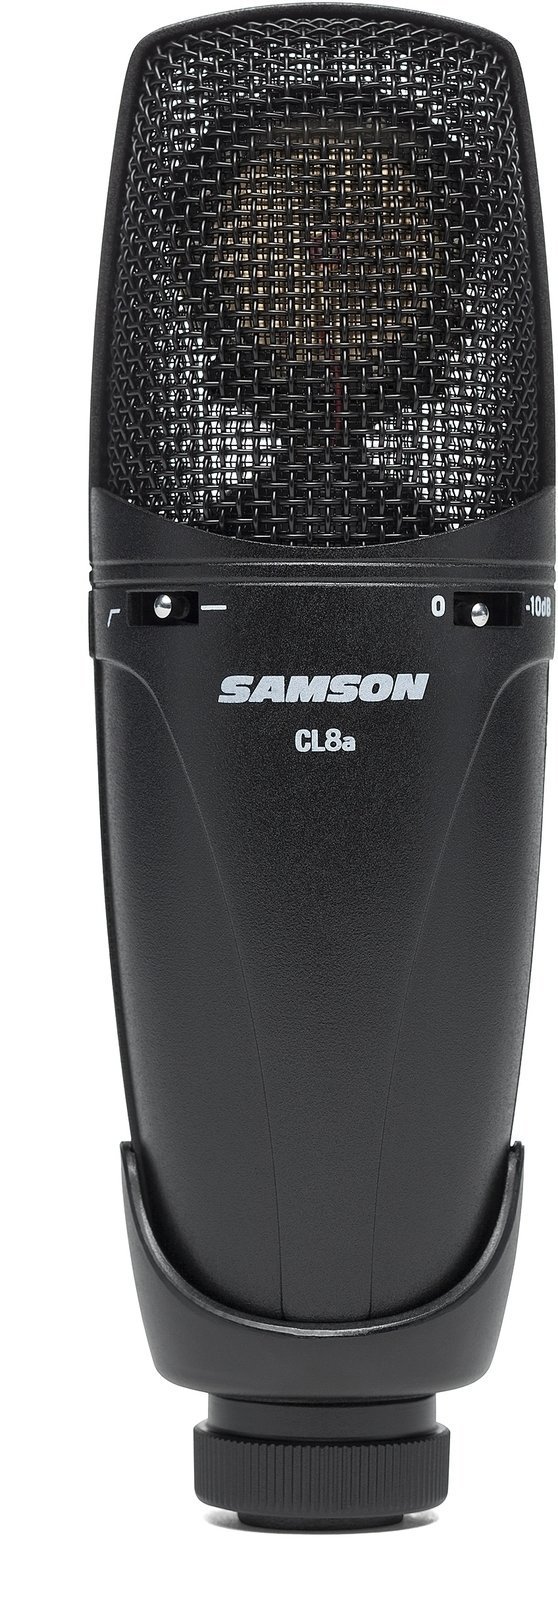 Samson CL8a Samson